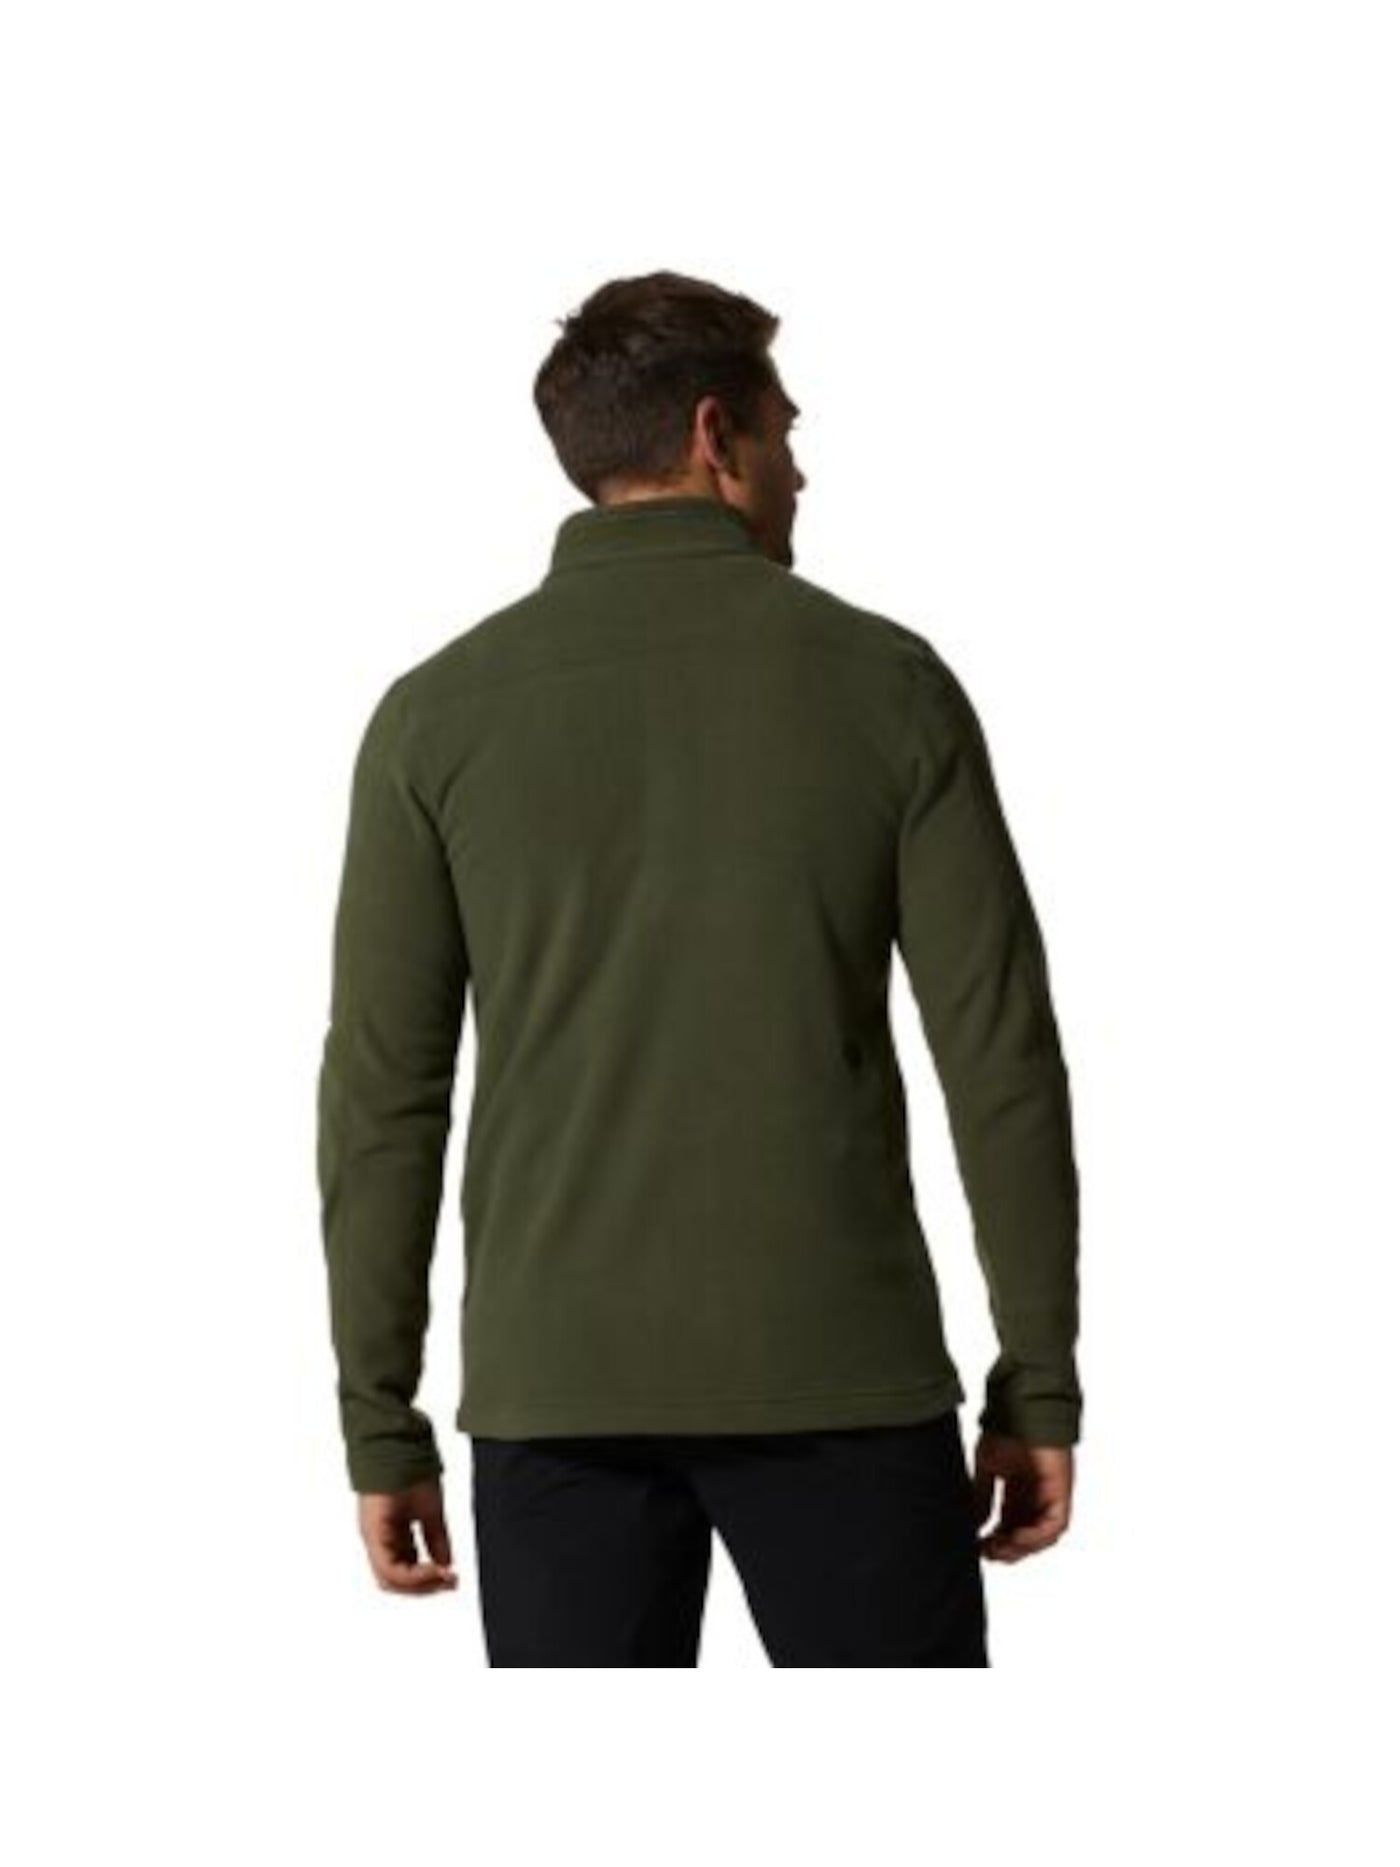 MOUNTAIN HARD WEAR Mens Green Long Sleeve Stand Collar Quarter-Zip Moisture Wicking Sweatshirt S